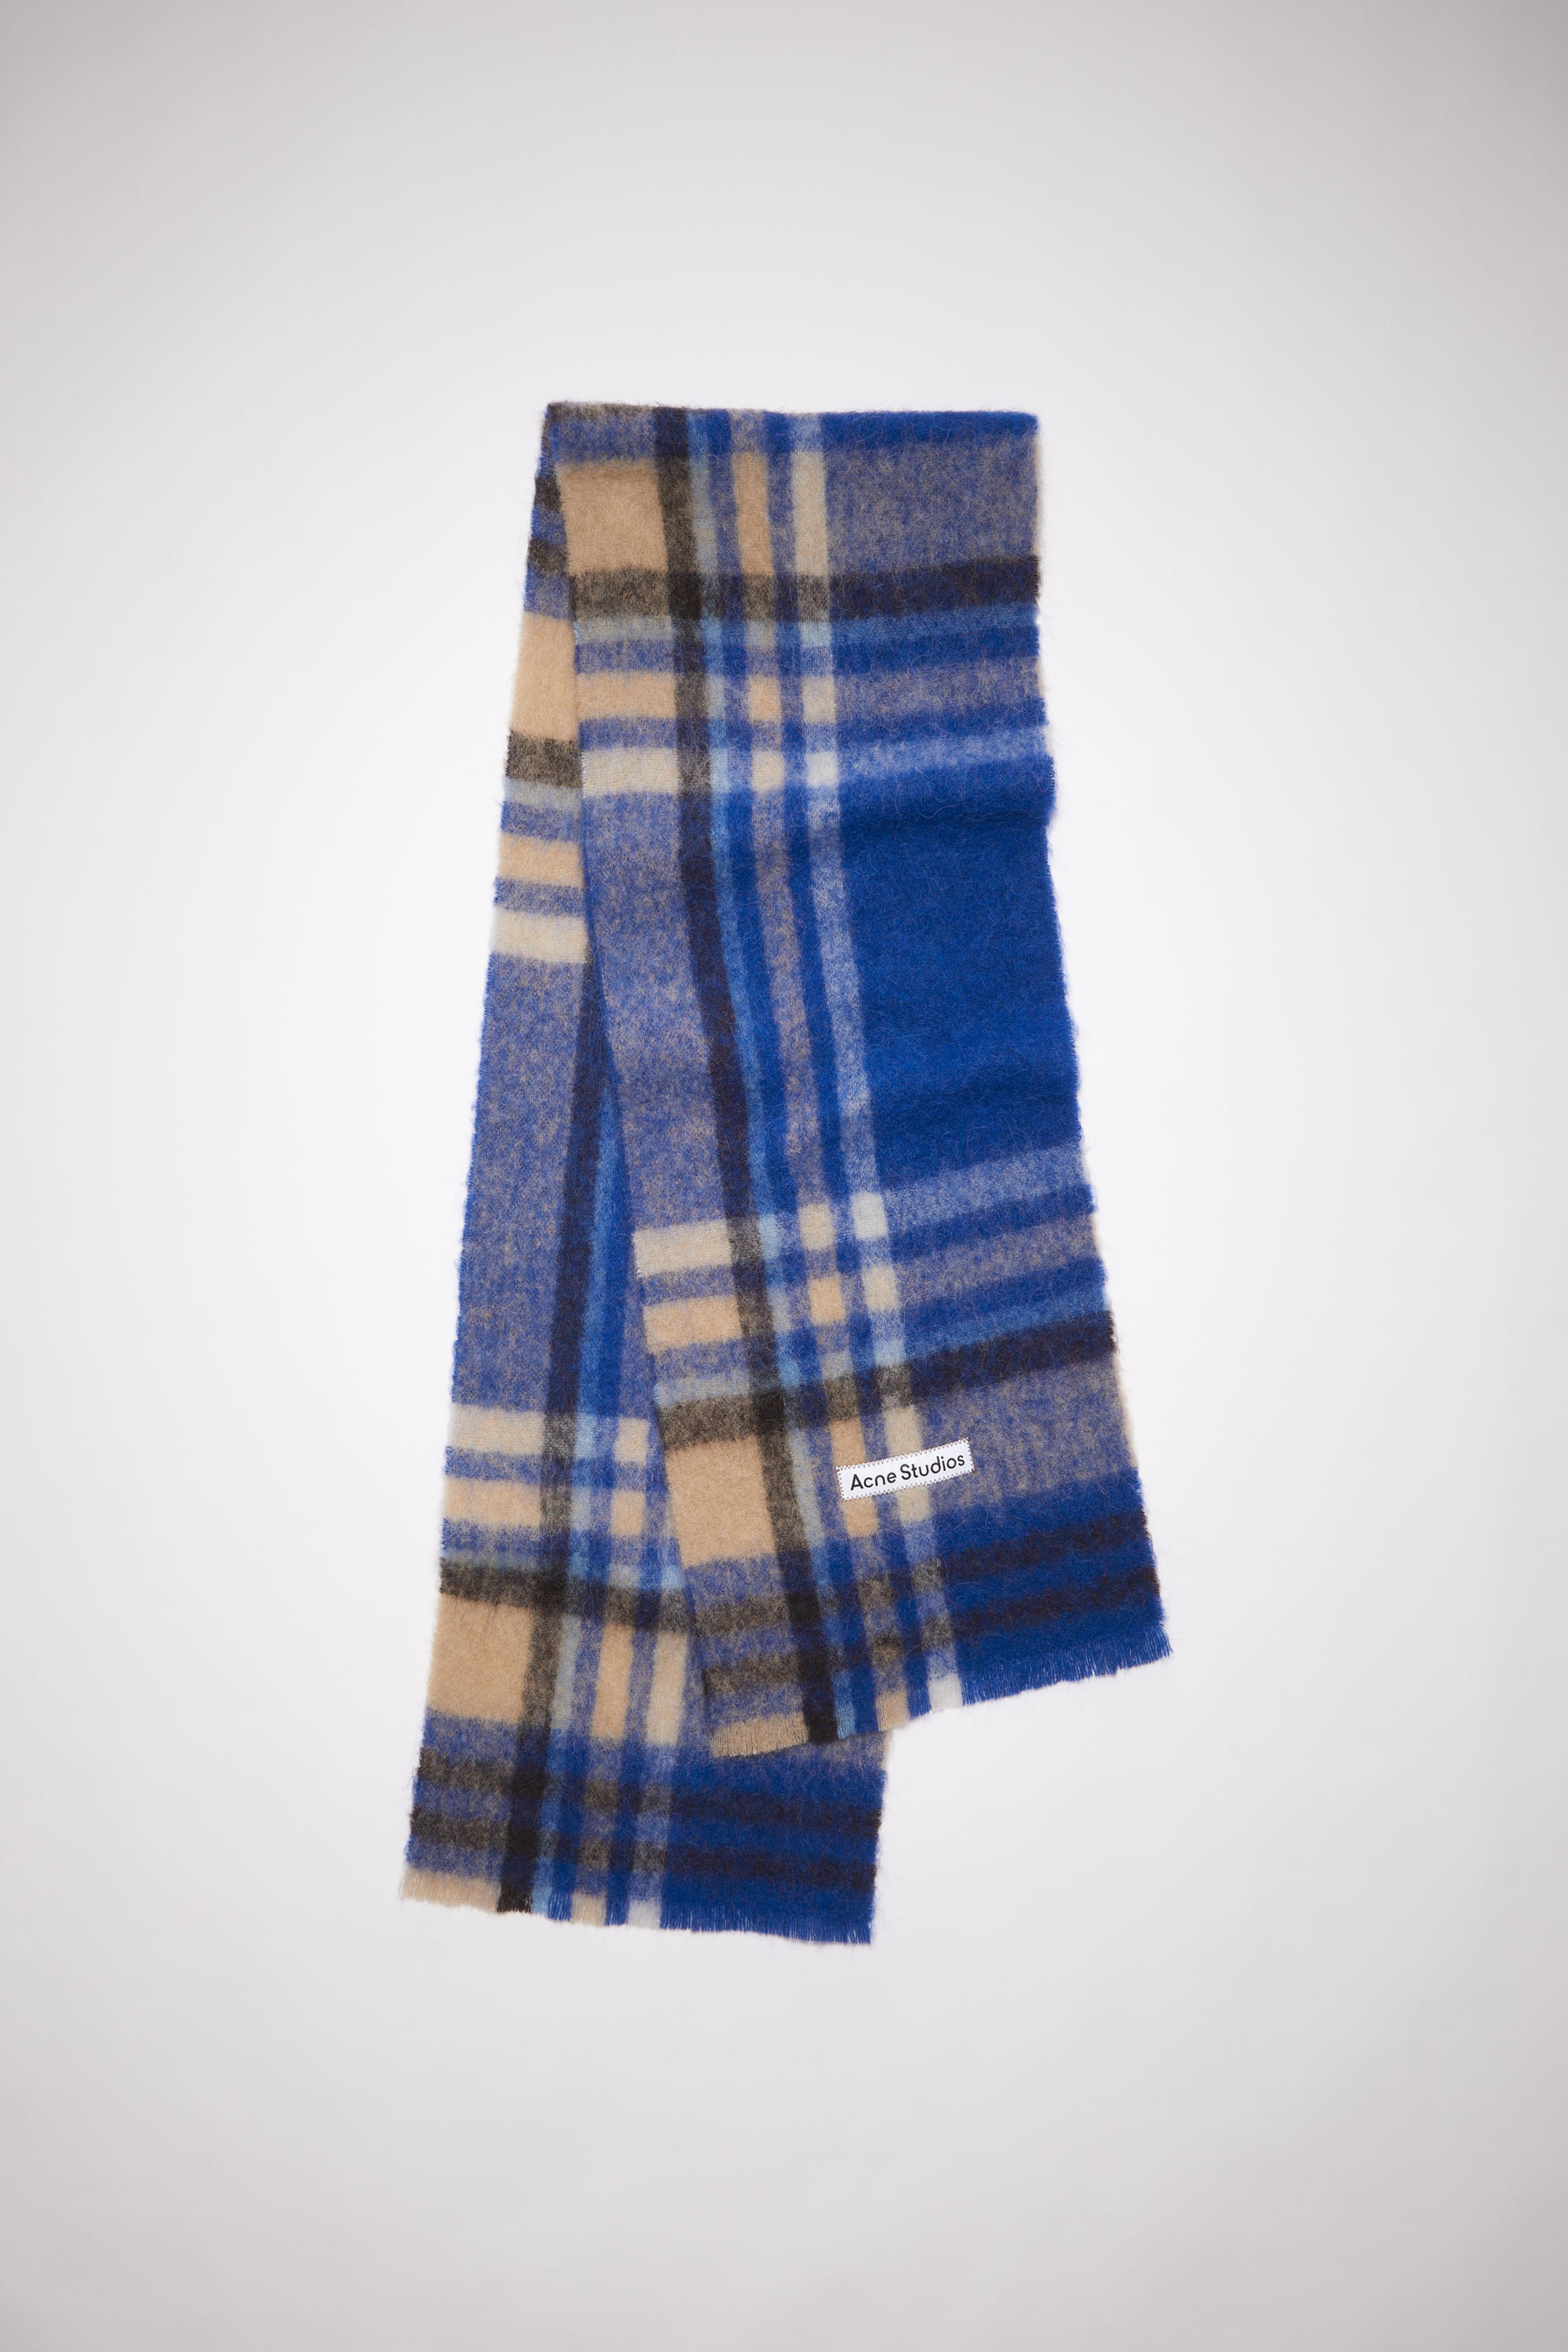 Acne Studios - Checked logo wool scarf - Electric blue/beige